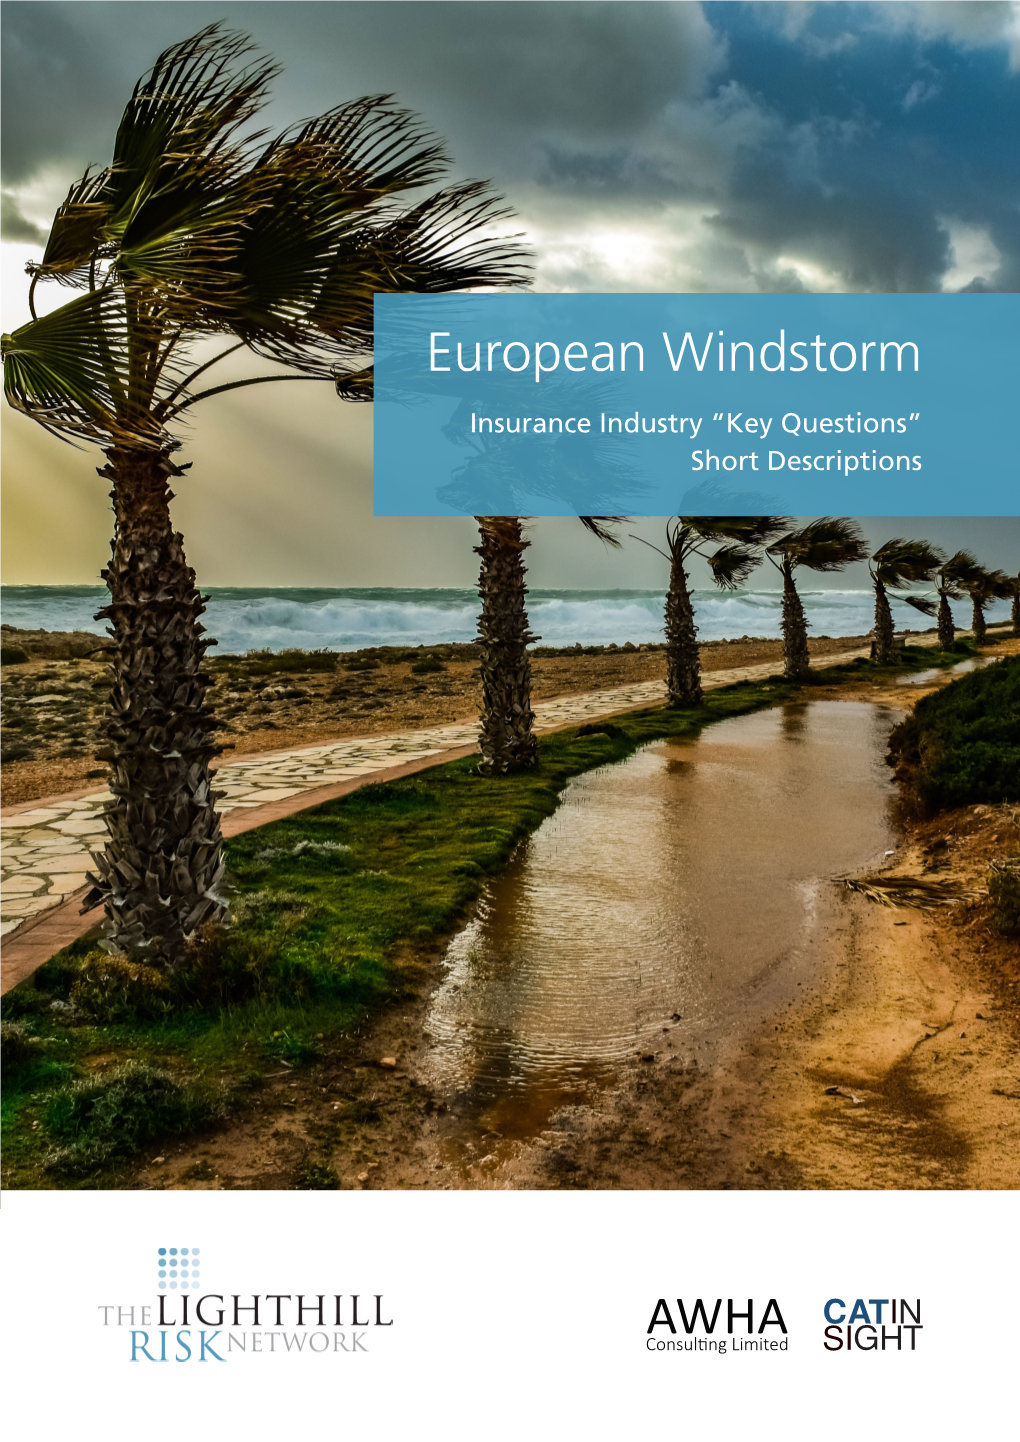 European Windstorm Insurance Industry “Key Questions” Short Descriptions